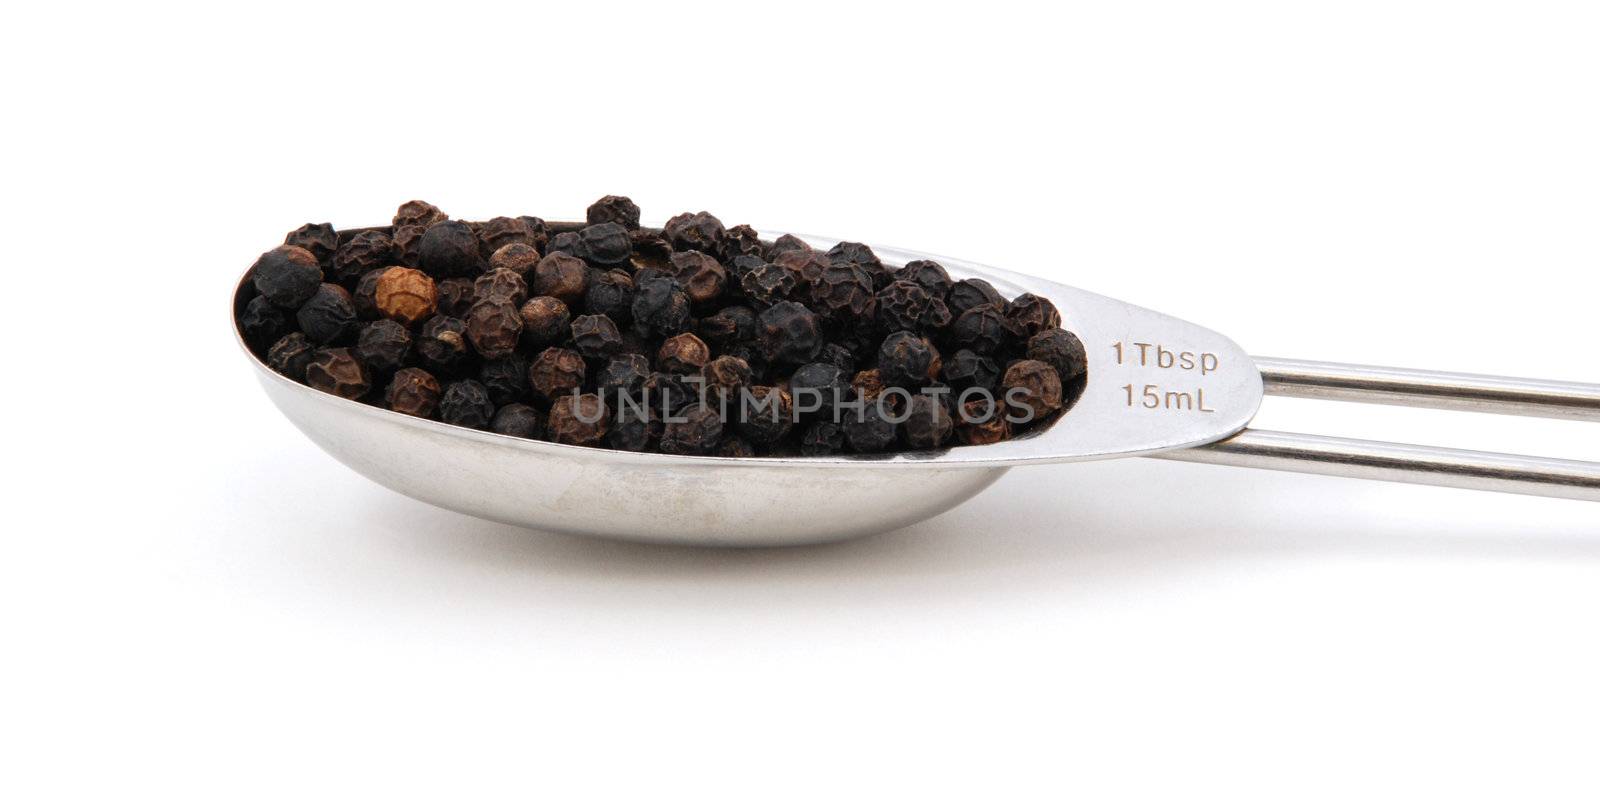 Black peppercorns measured in a metal tablespoon by sarahdoow